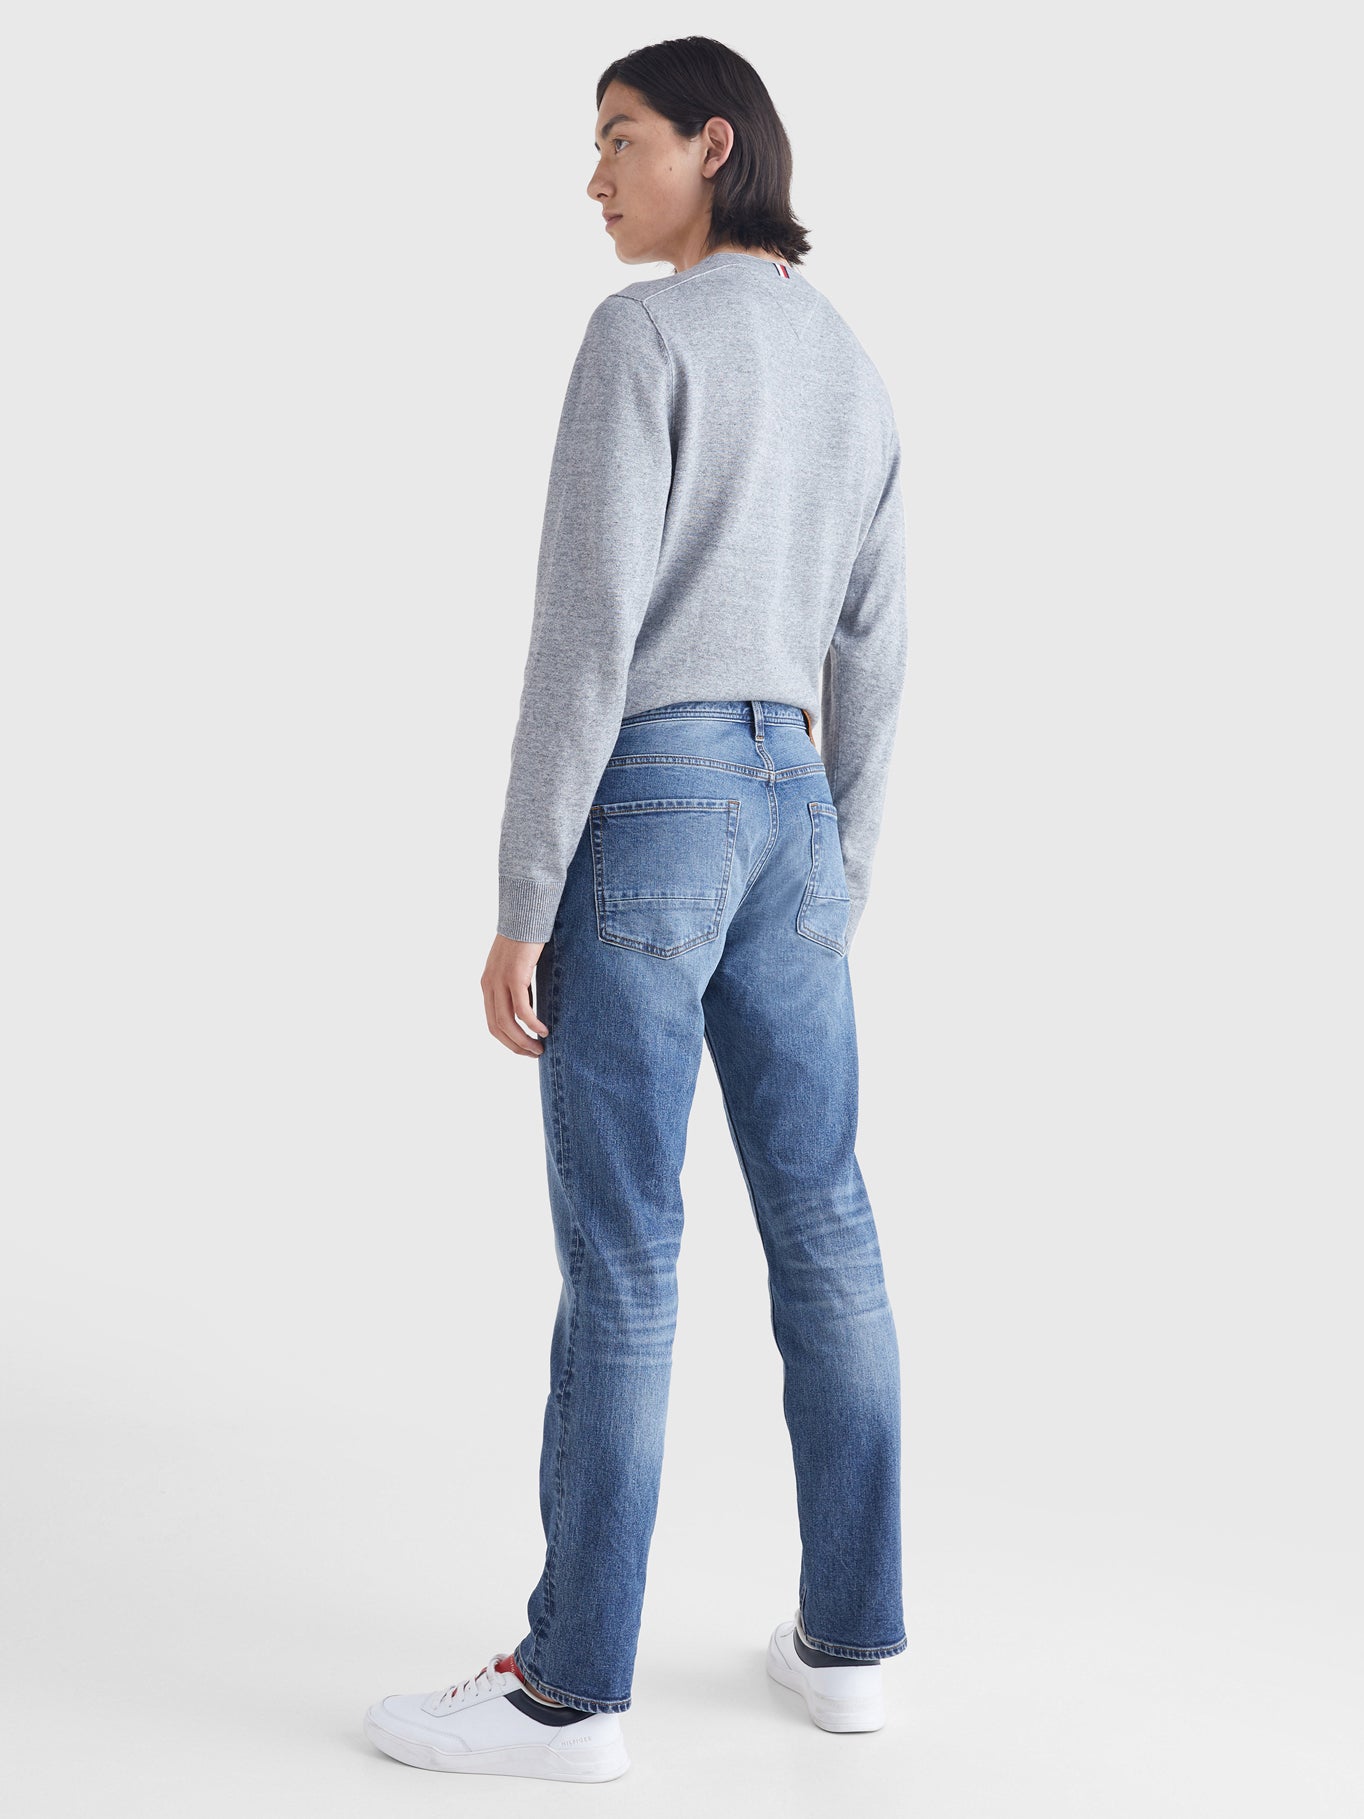 pantalon-jeans-tommy-hilfiger-p-caballeros-2